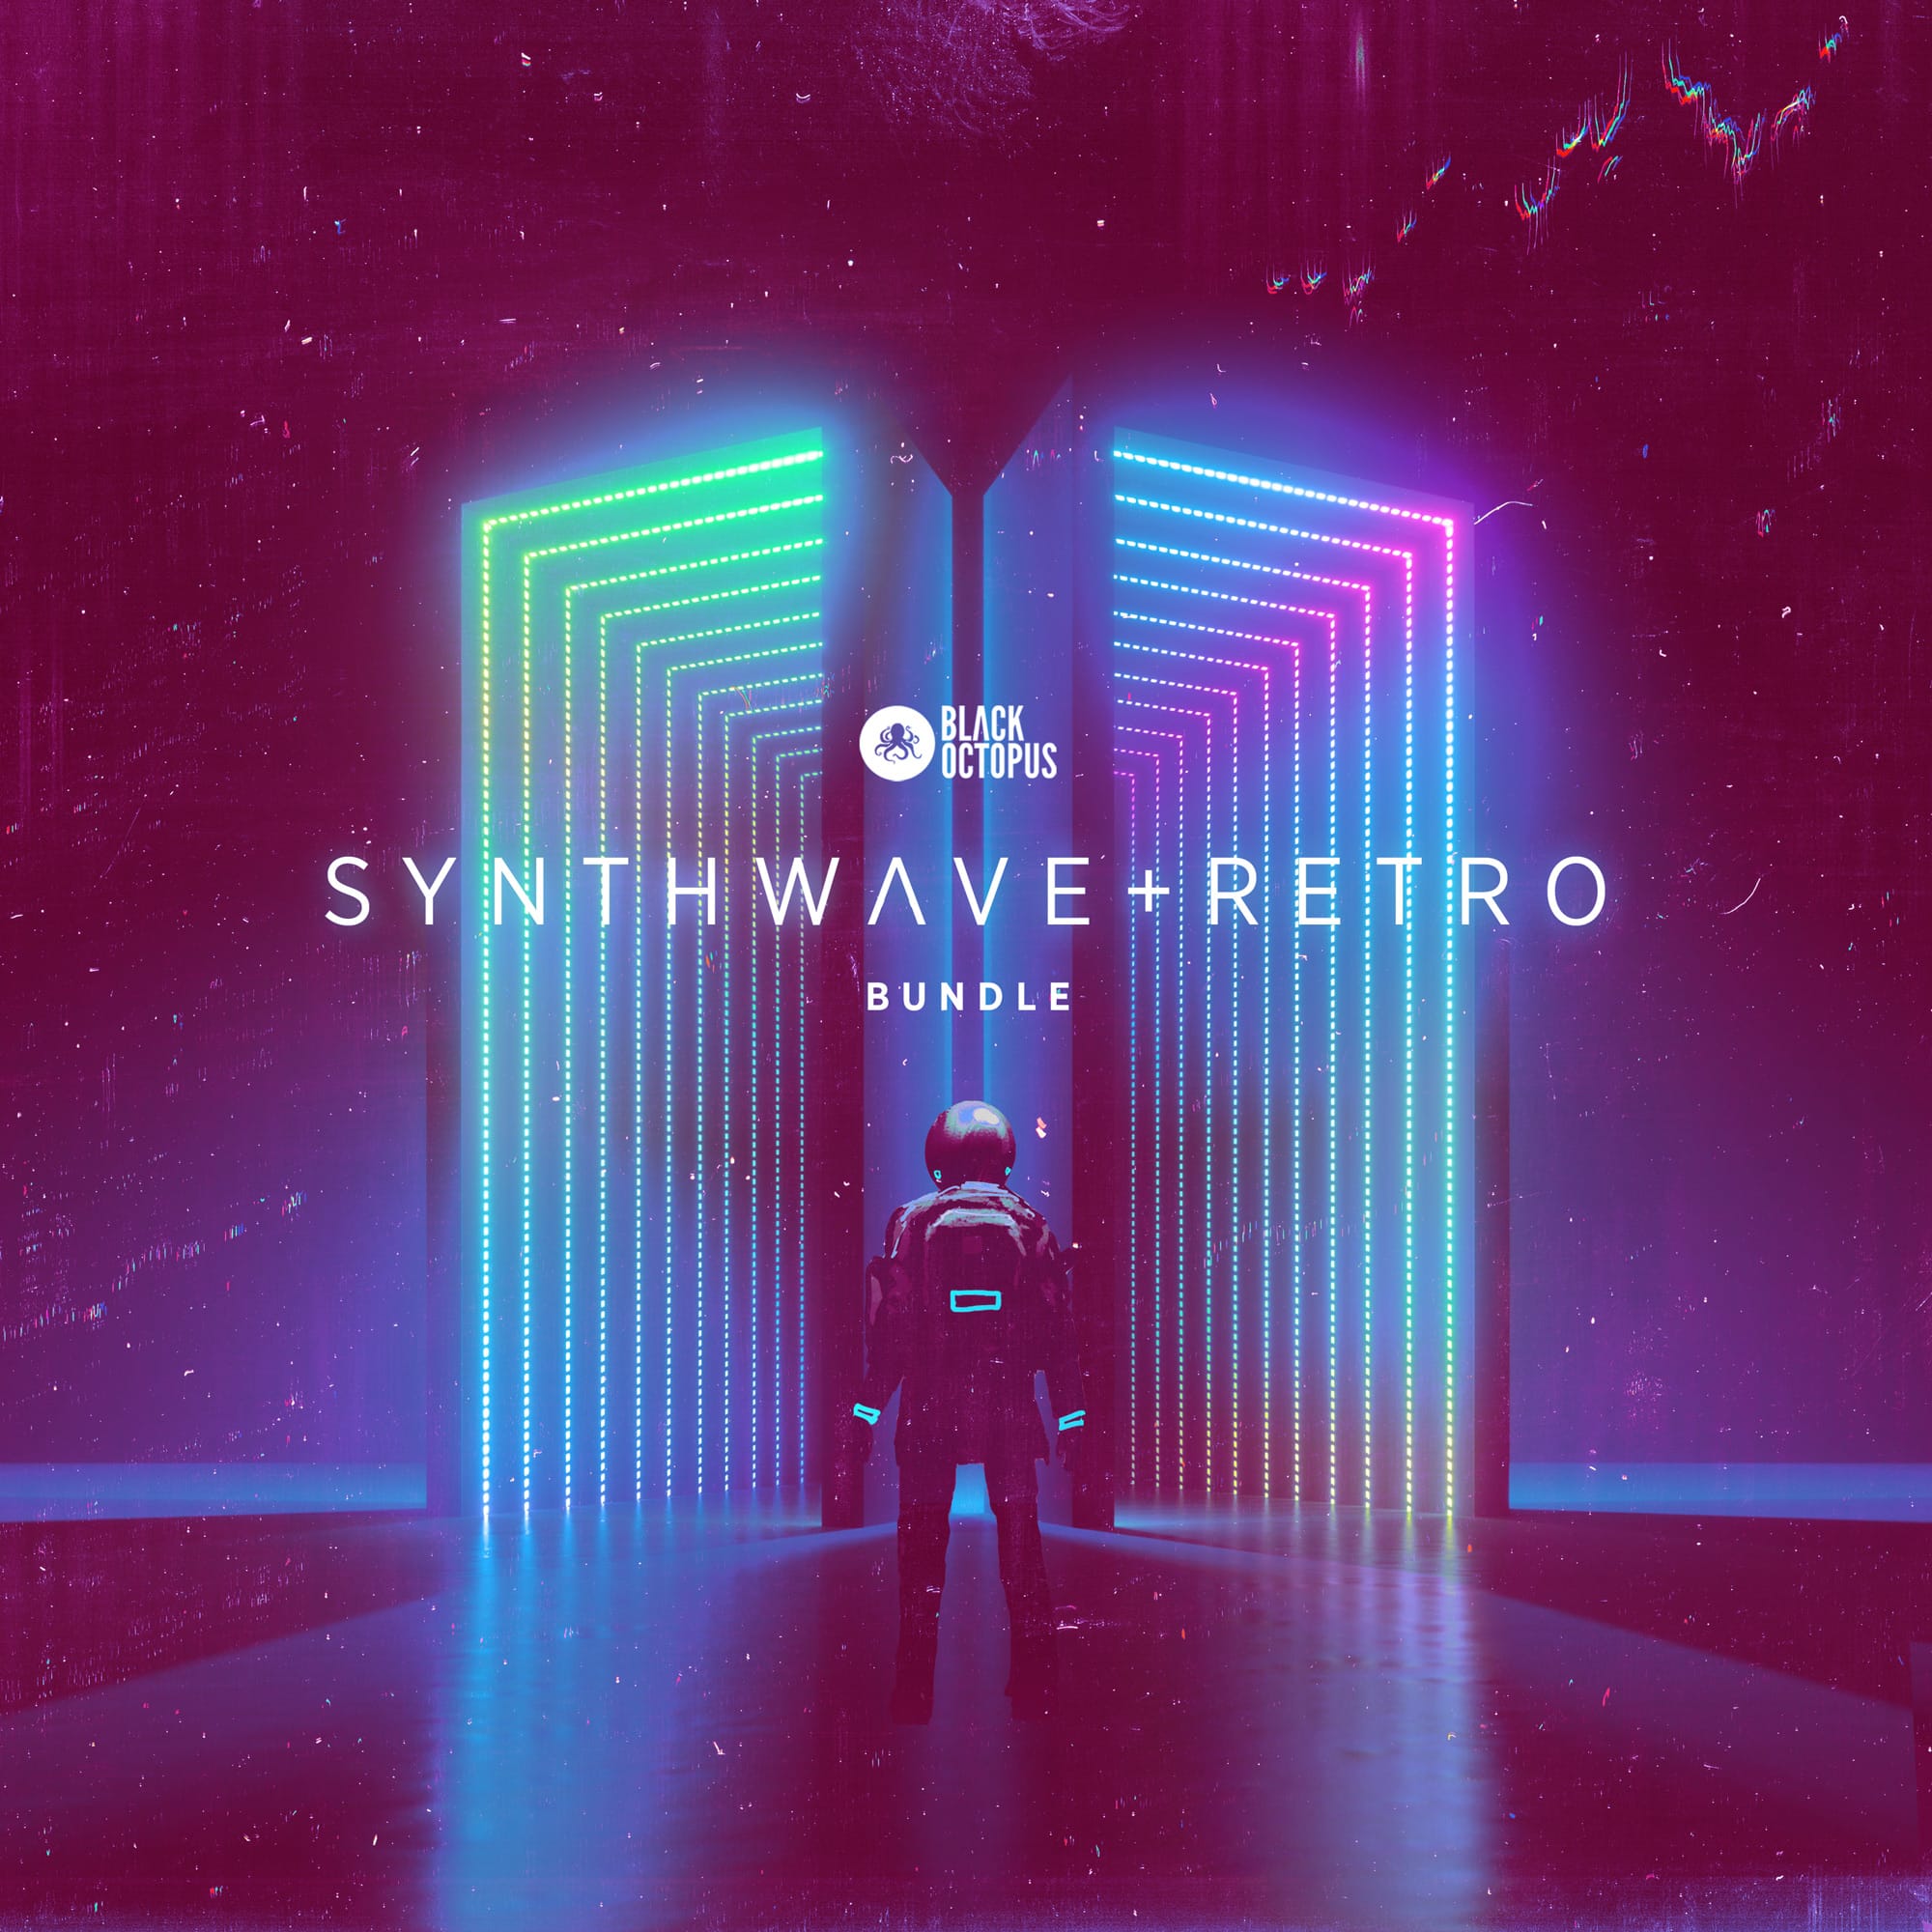 89% off “Synthwave & Retro Bundle” by Black Octopus Sound